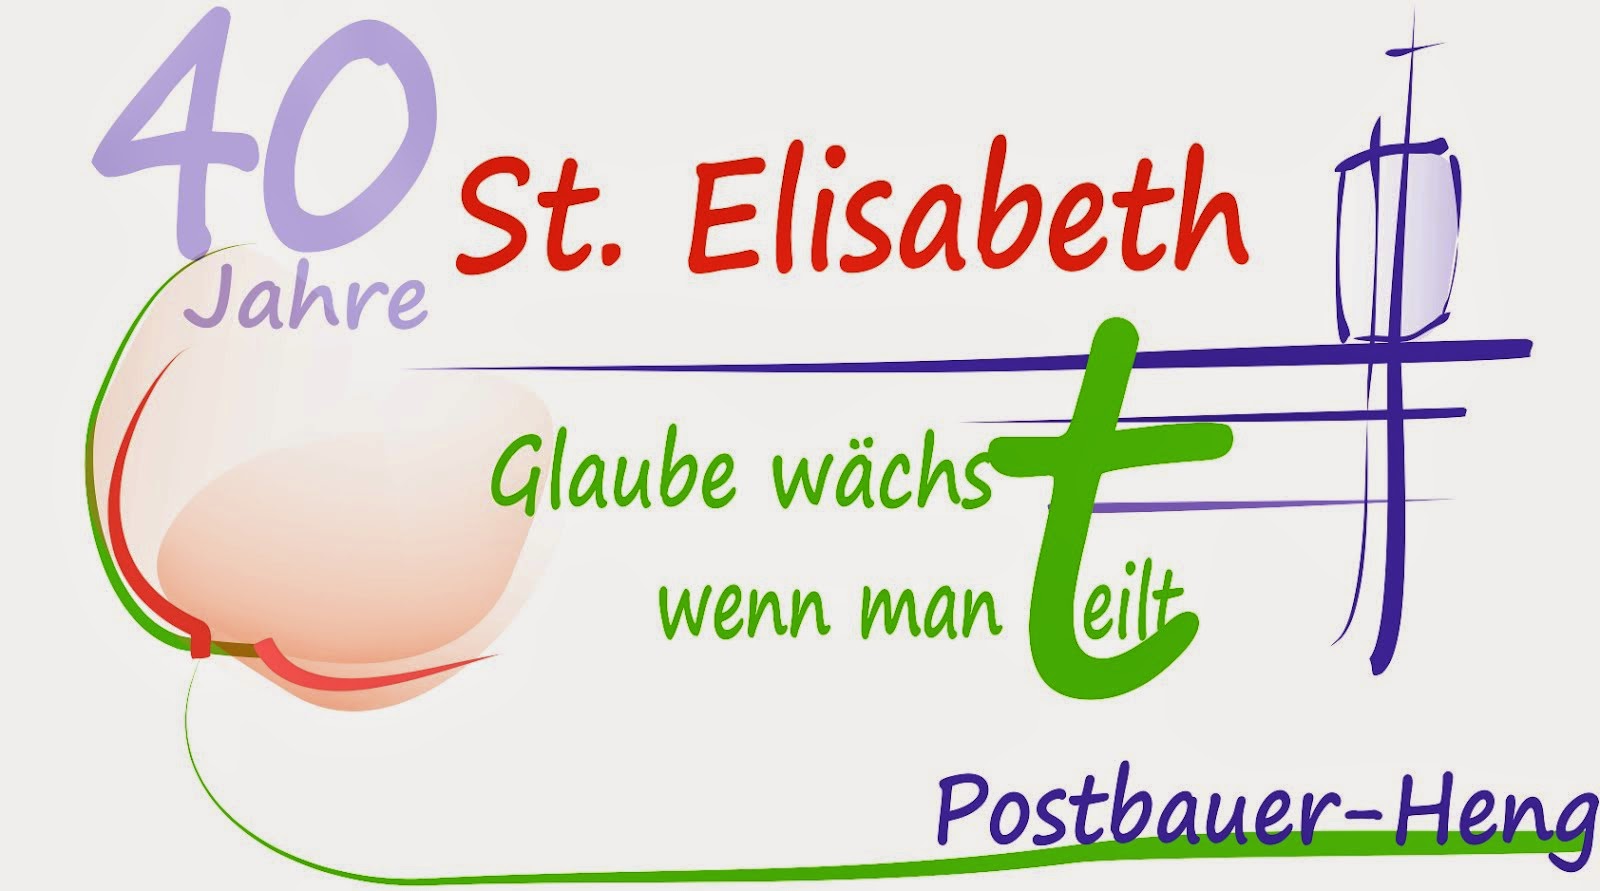 40 Jahre St. Elisabeth